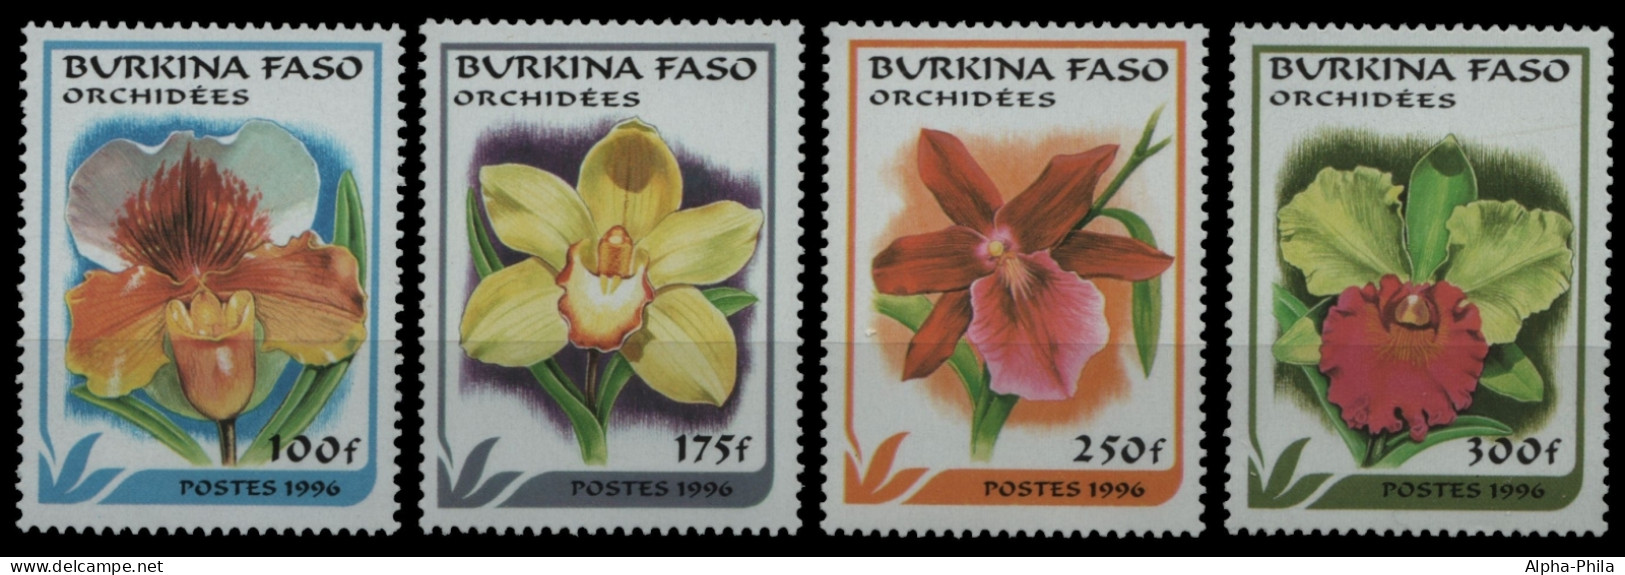 Burkina Faso 1996 - Mi-Nr. 1423-1426 ** - MNH - Orchideen / Orchids - Burkina Faso (1984-...)